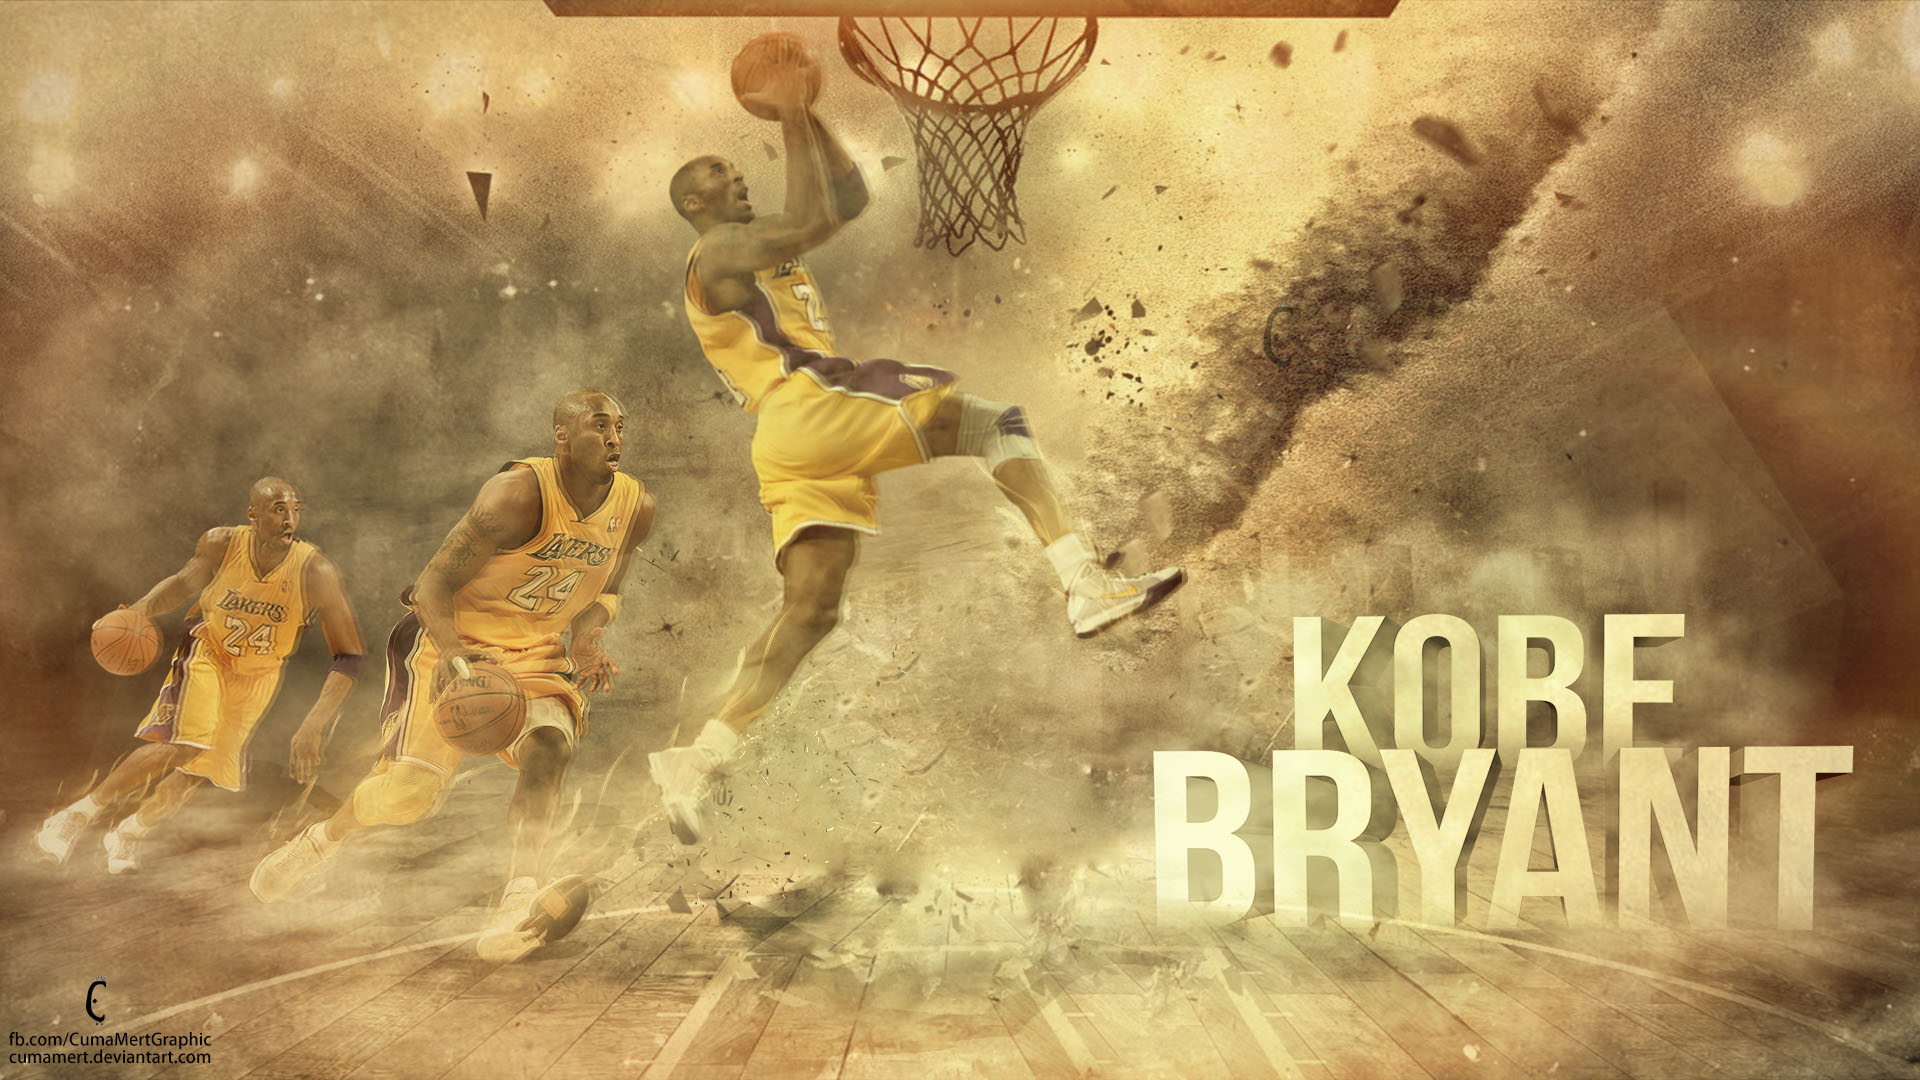  Los Angeles Lakers Lock Screen PC Wallpaper